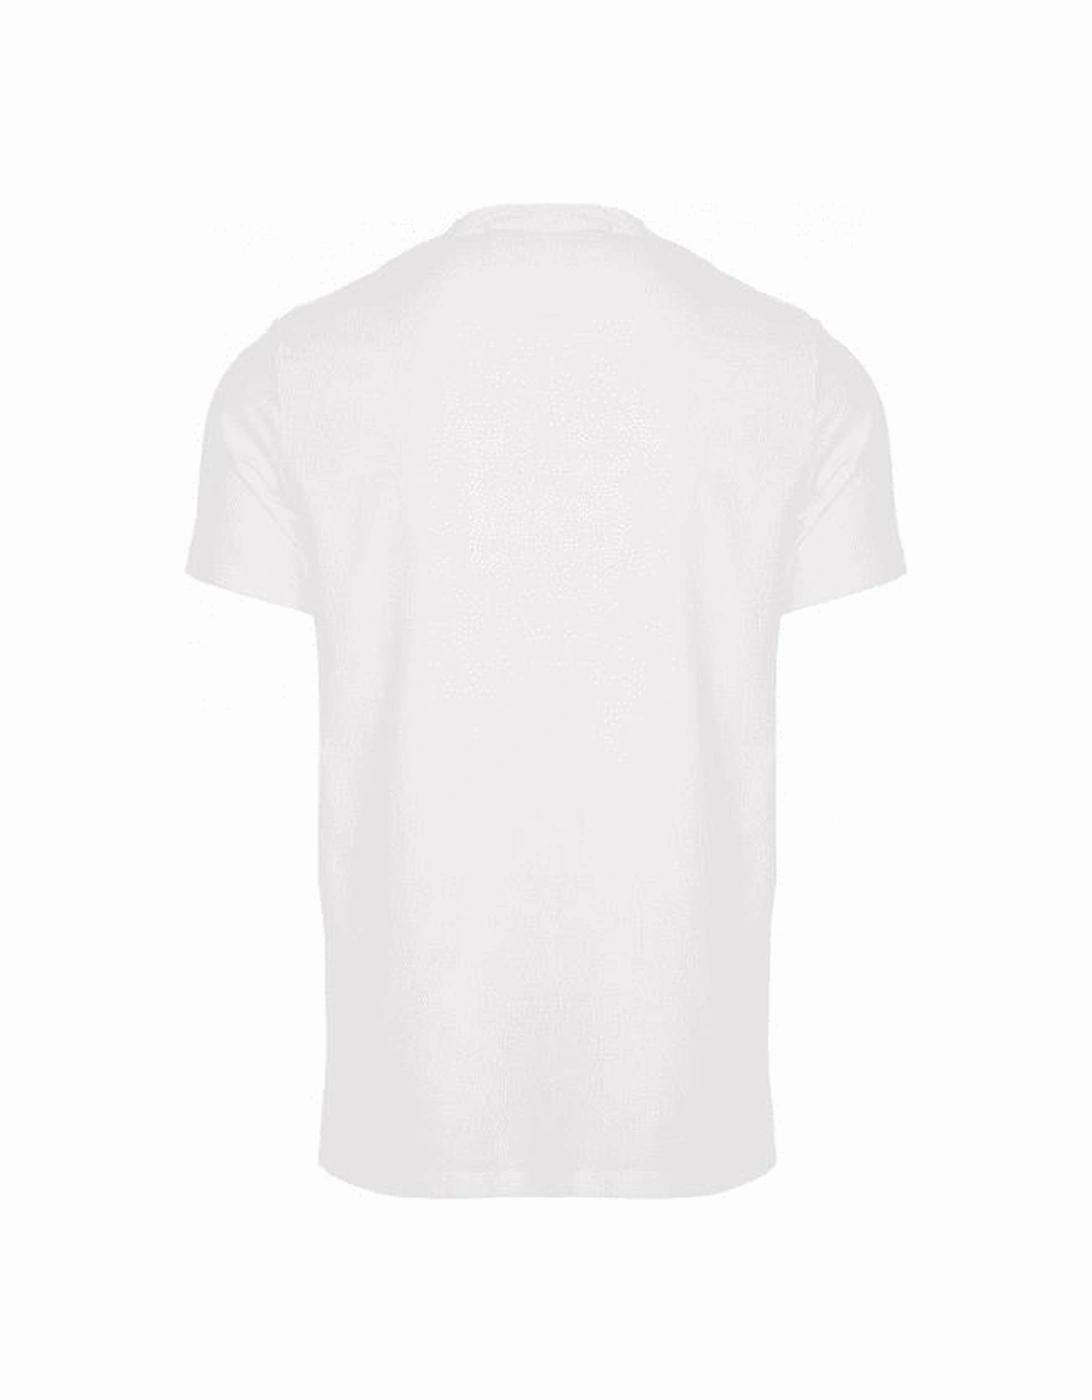 Cotton Vertical Logo White T-Shirt